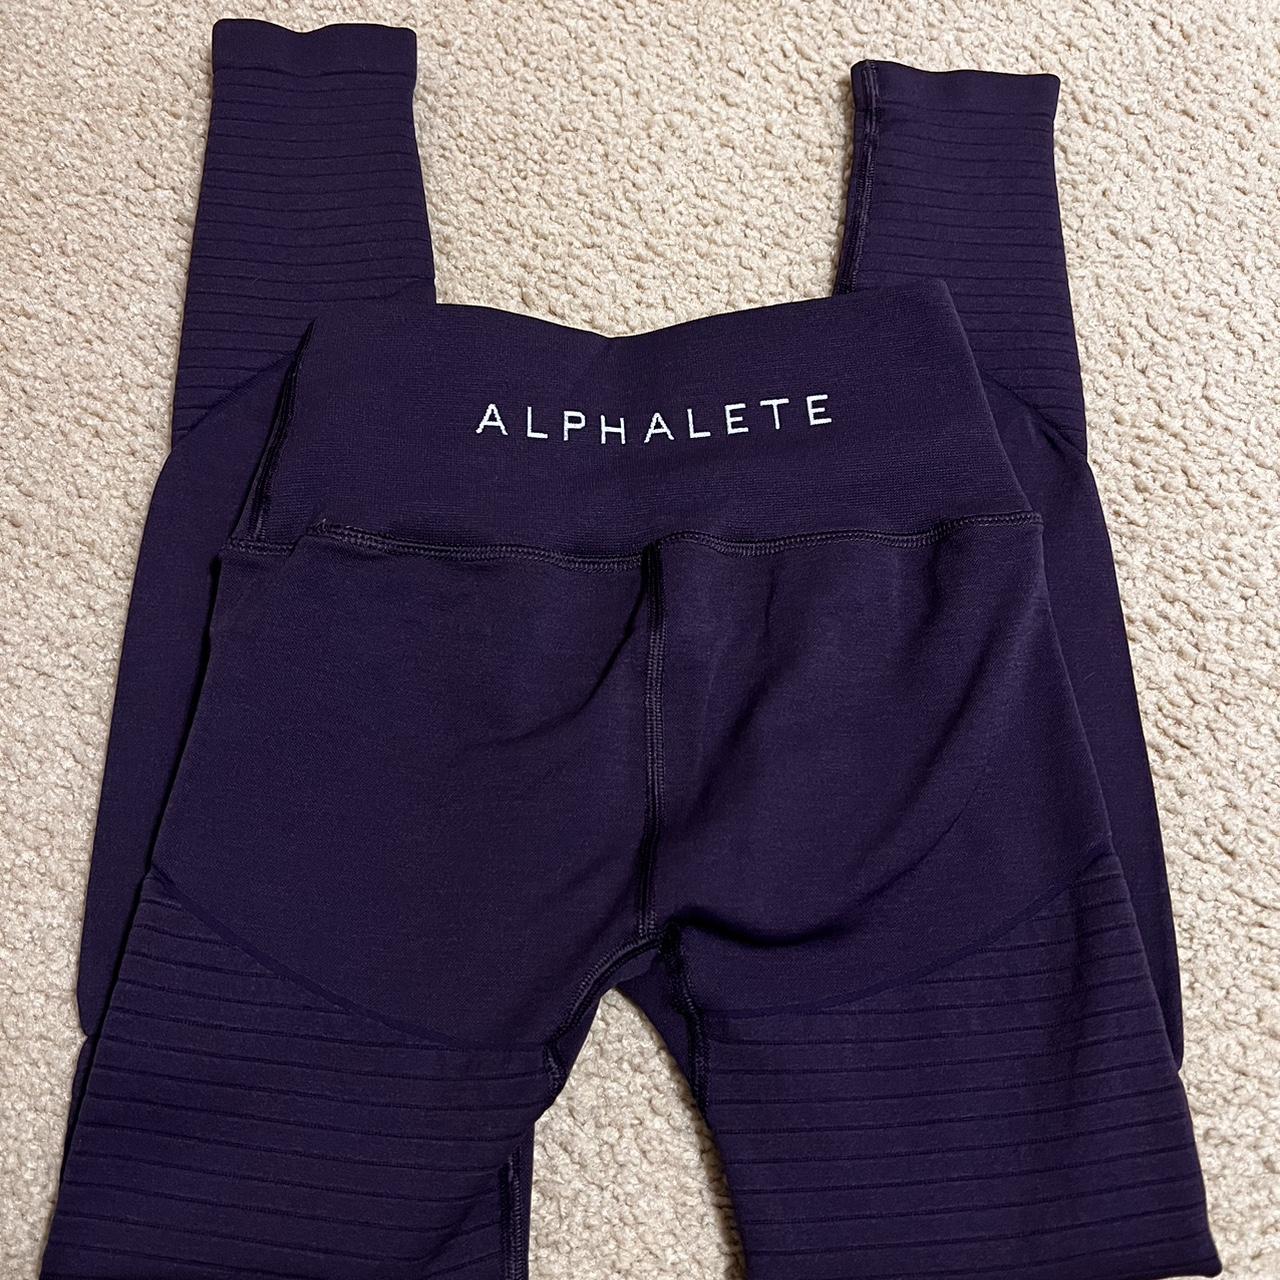 Alphalete Revival R6 Leggings 💜✨, Dark purple size